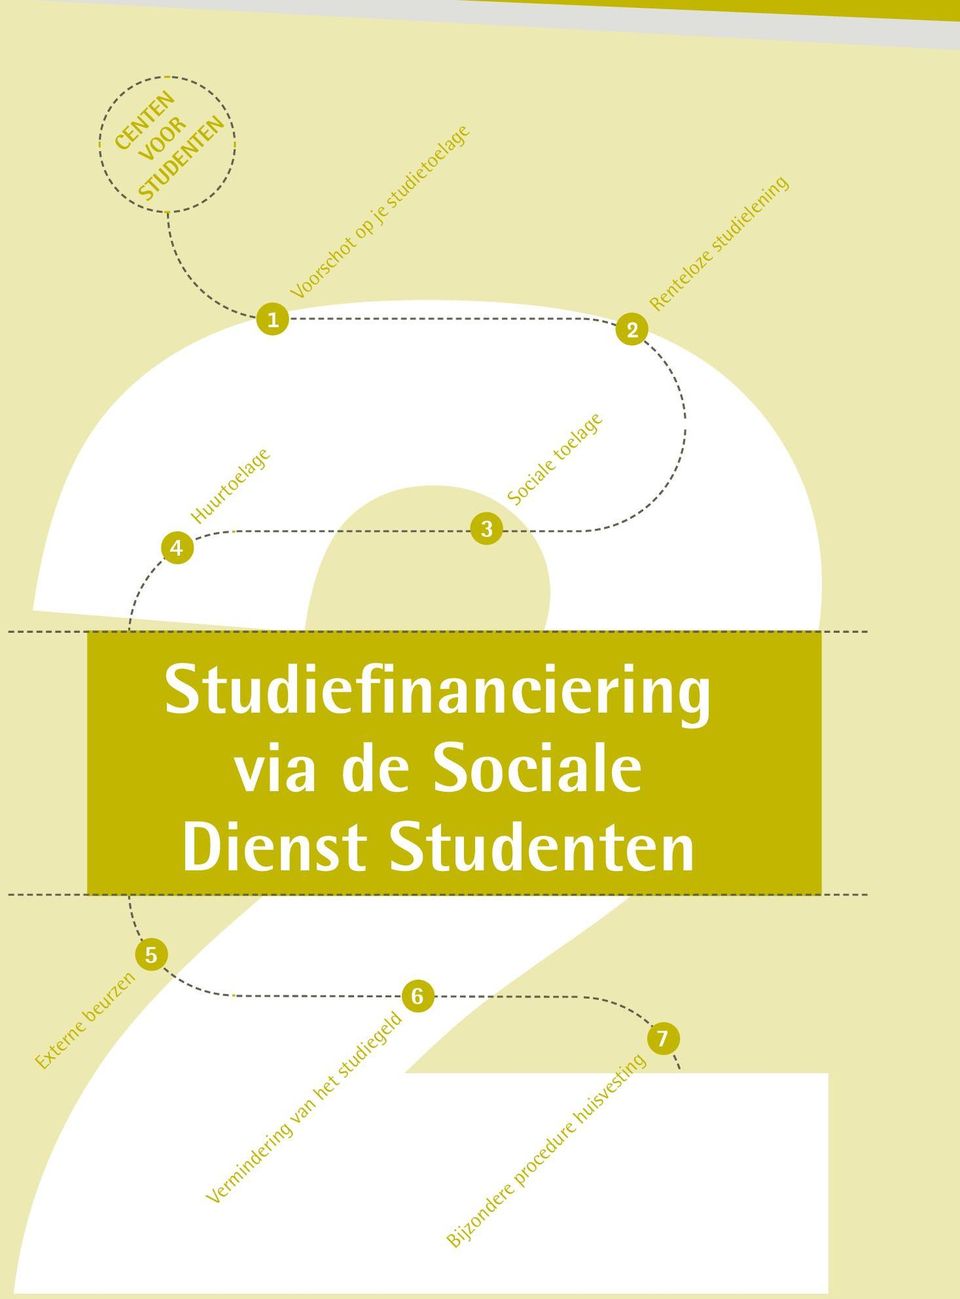 Studiefinanciering via de Sociale Dienst Studenten